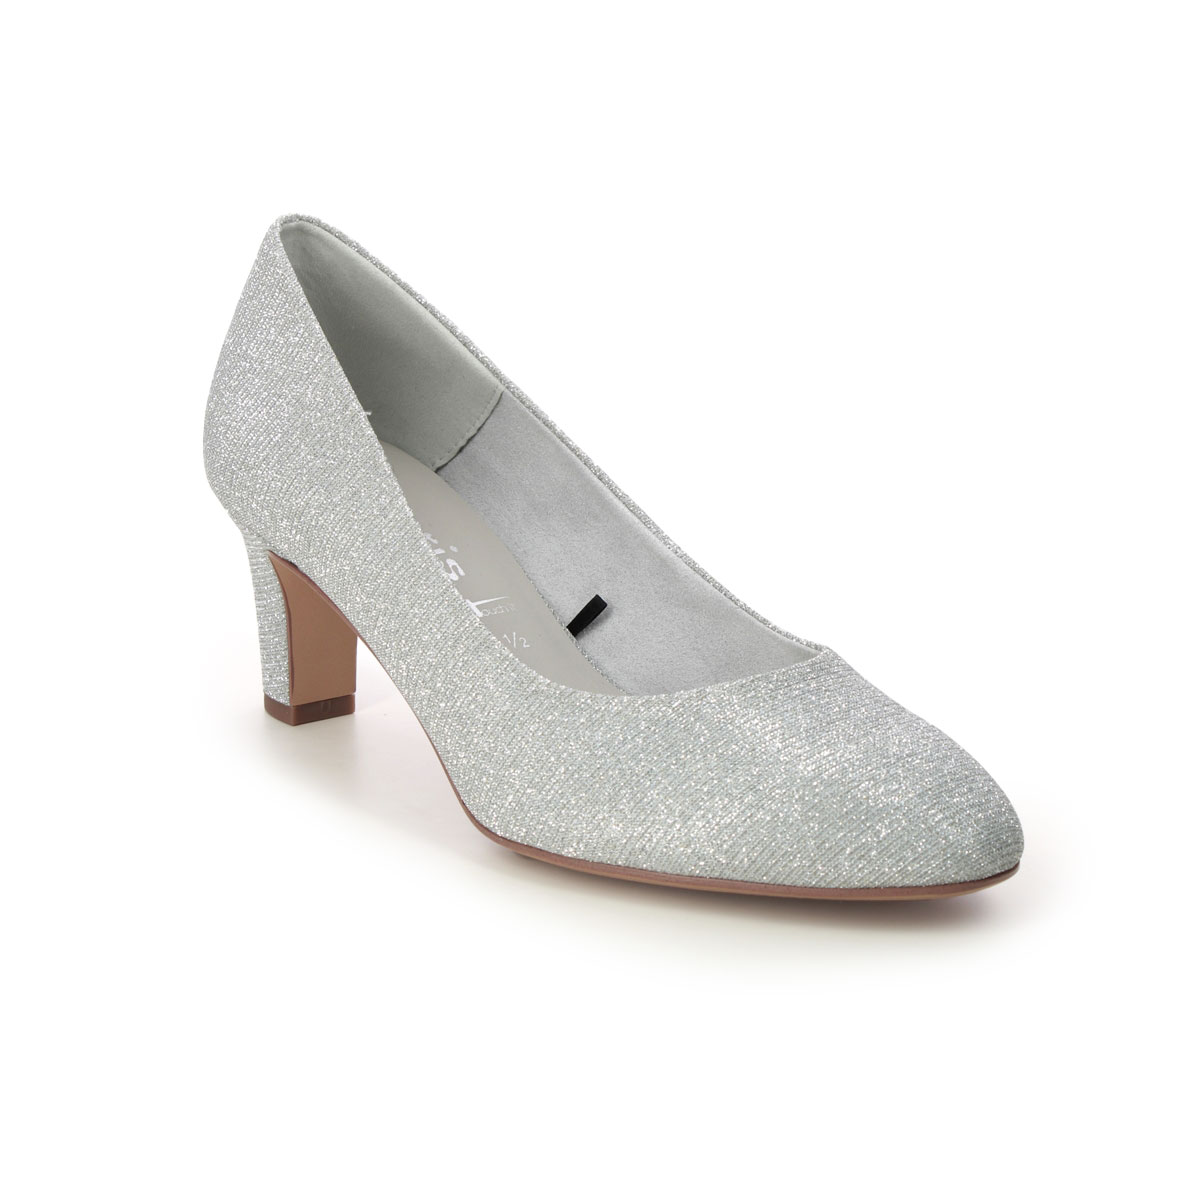 Tamaris Daenerys Silver Glitz Womens Court Shoes 22418-41-9A9 in a Plain Textile in Size 40